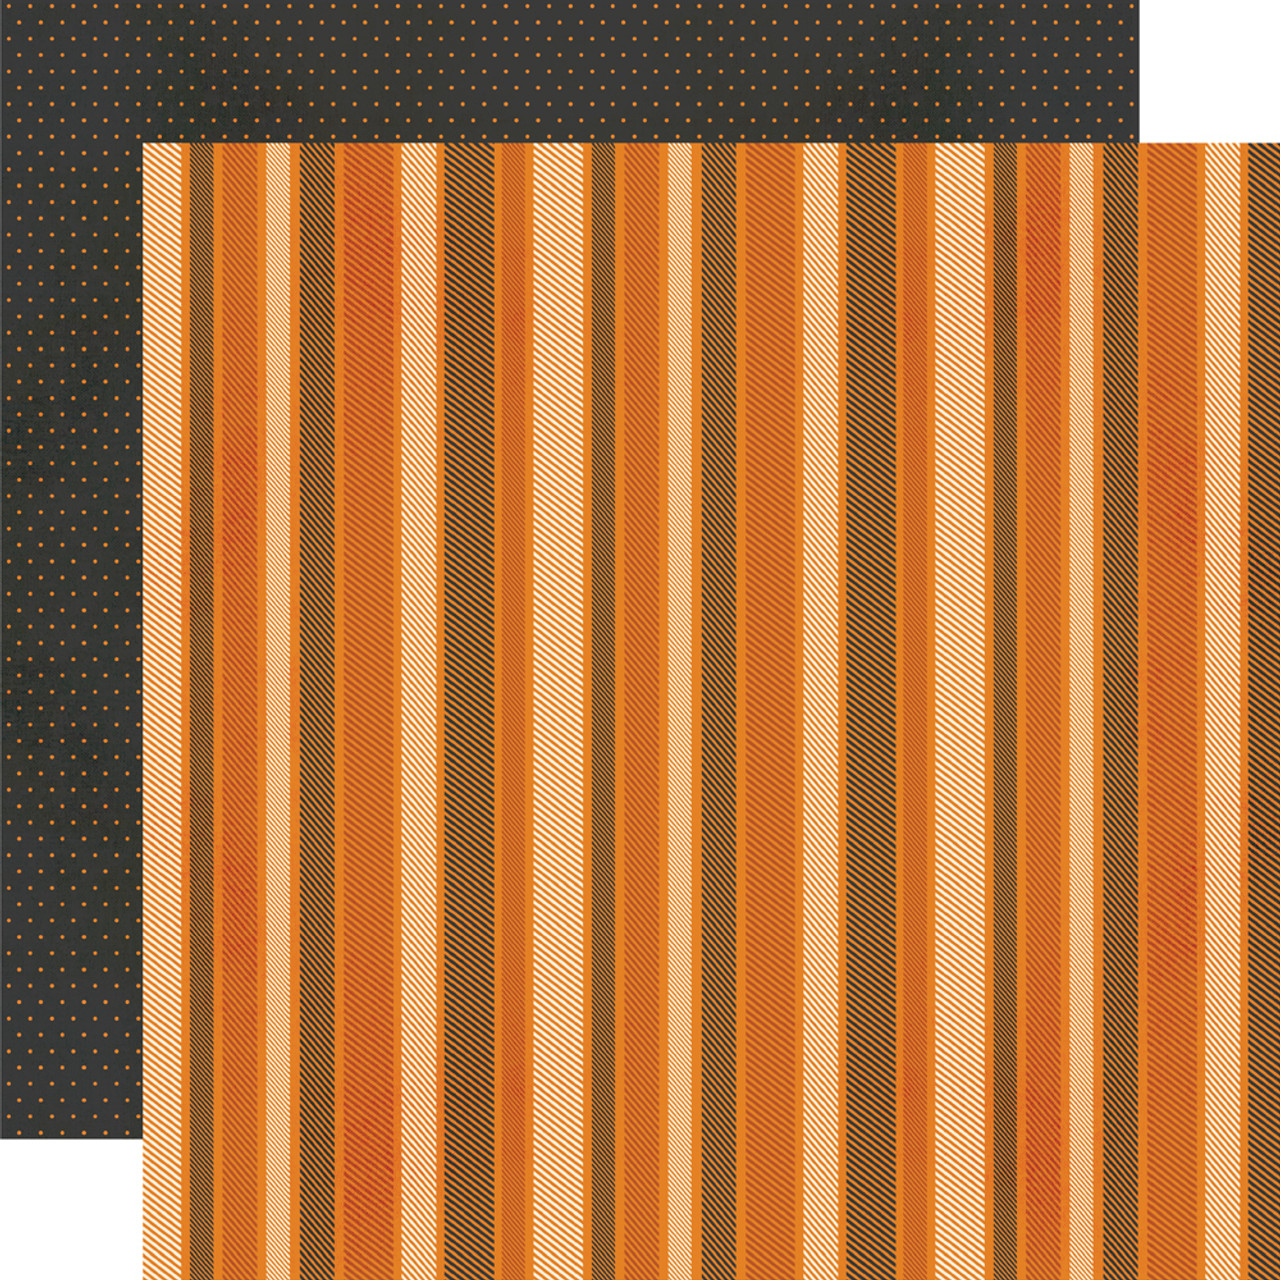 NEW Sided stripe brown cardstock scrapbook paper 12 x 12